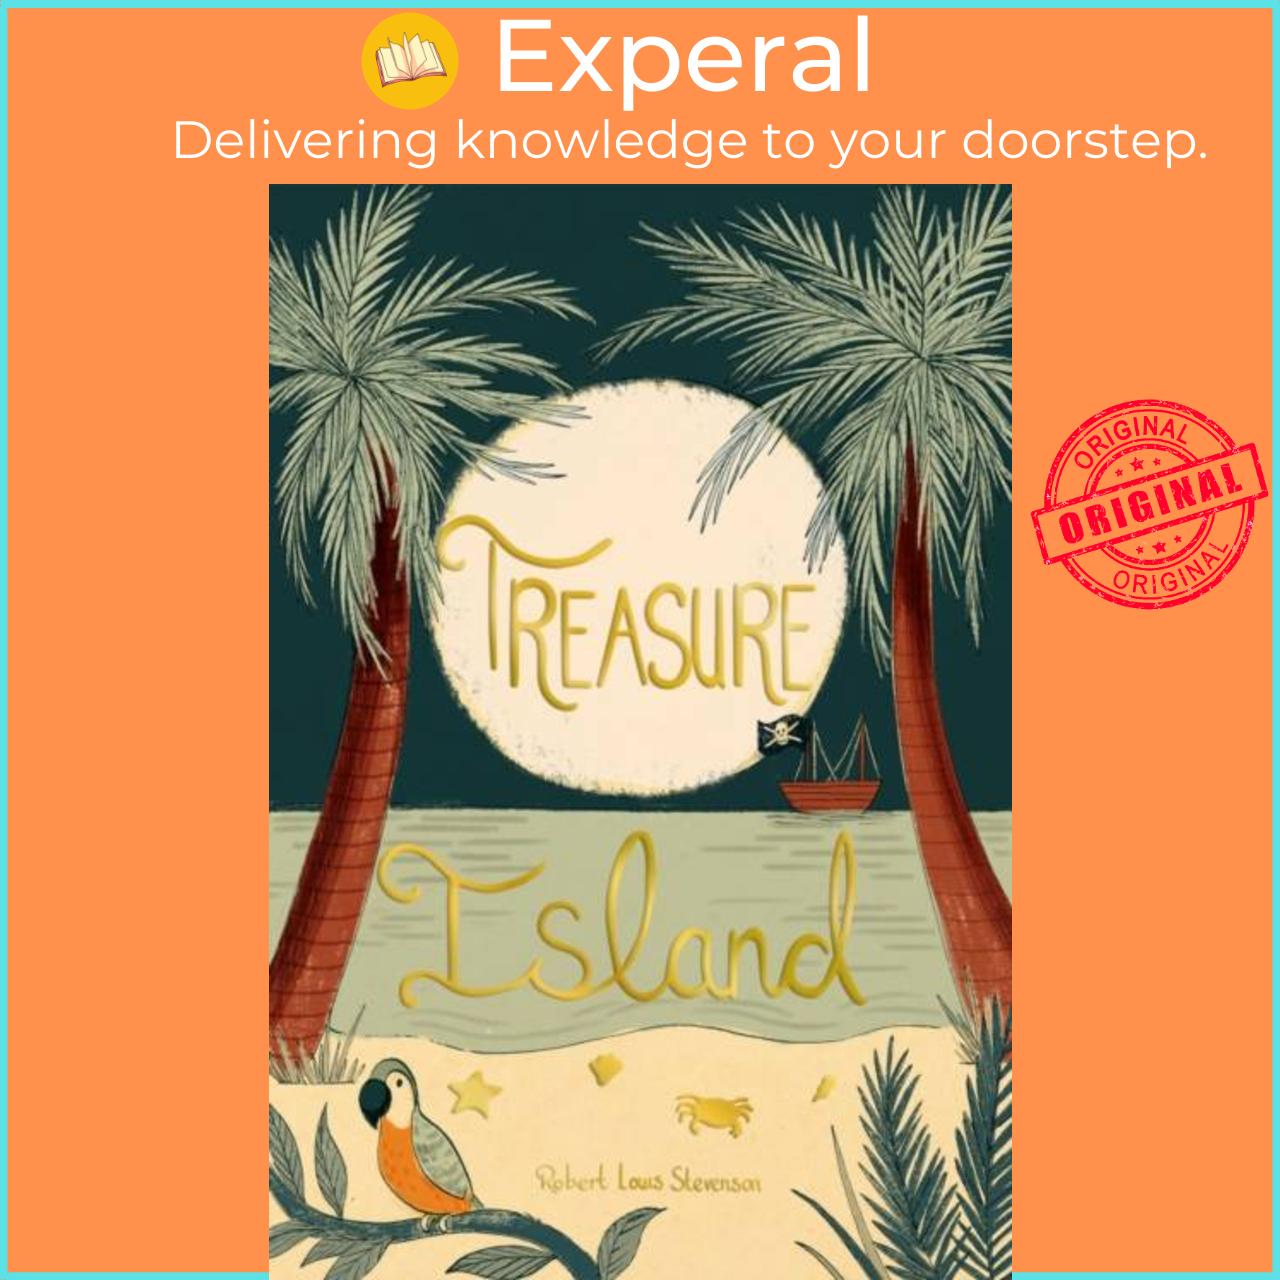 Sách - Treasure Island by Robert Louis Stevenson (UK edition, hardcover)